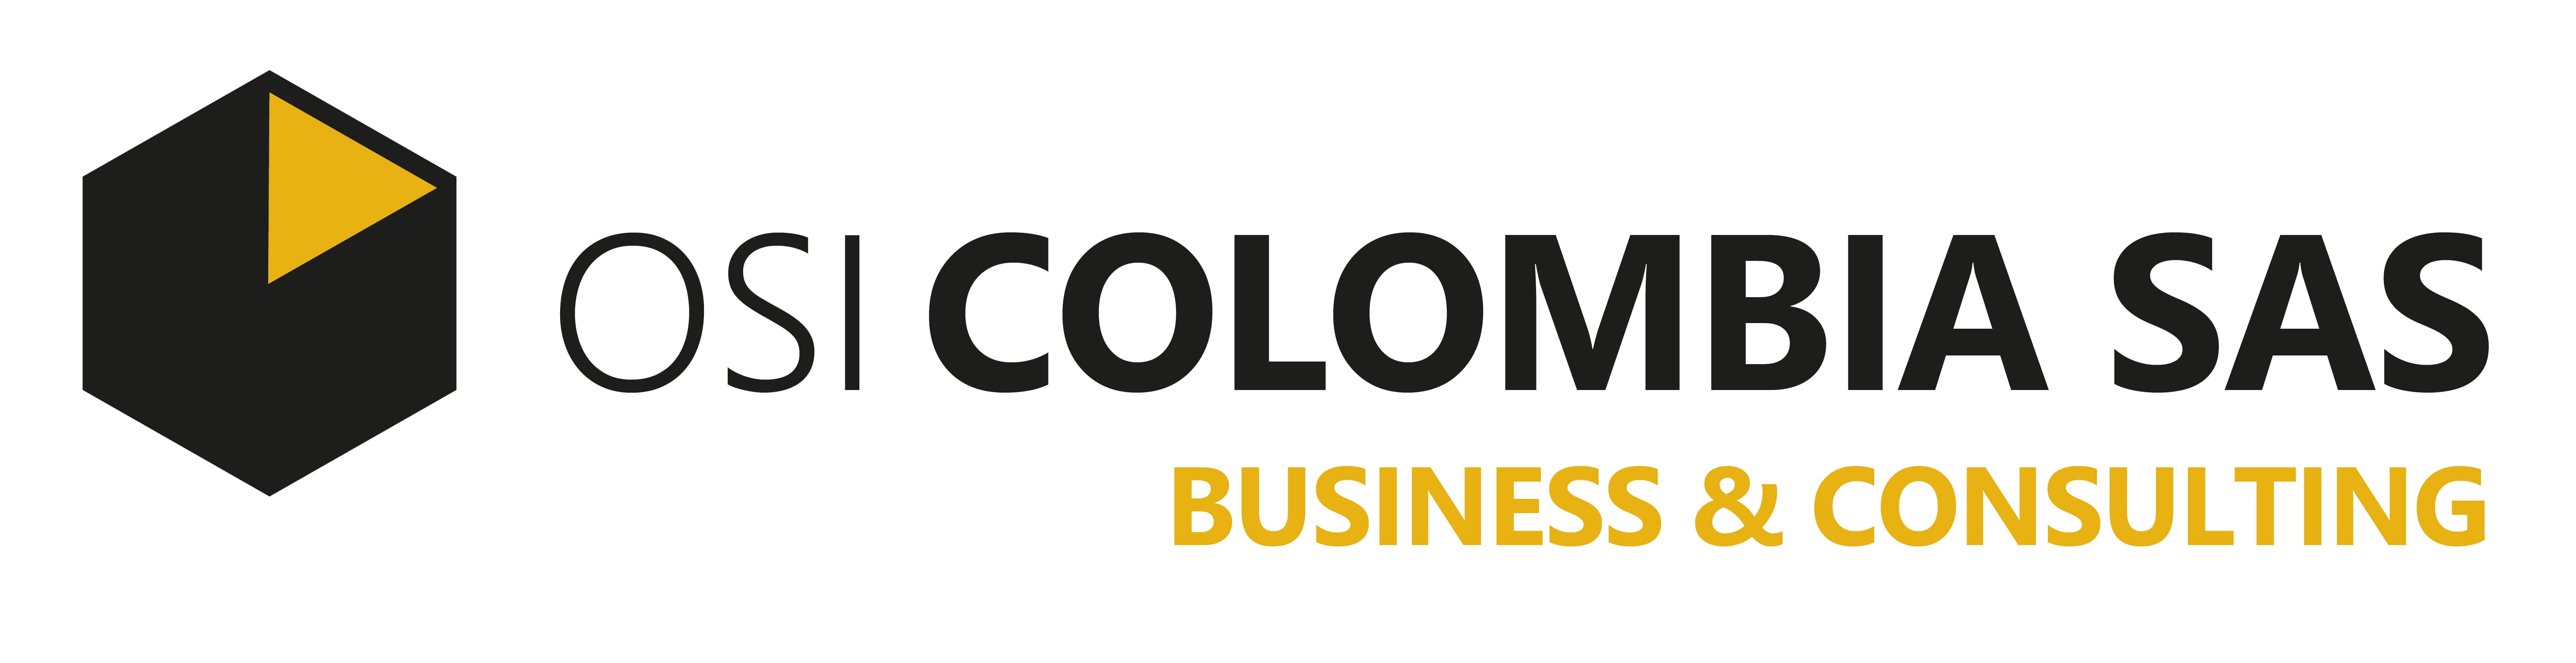 OSI COLOMBIA